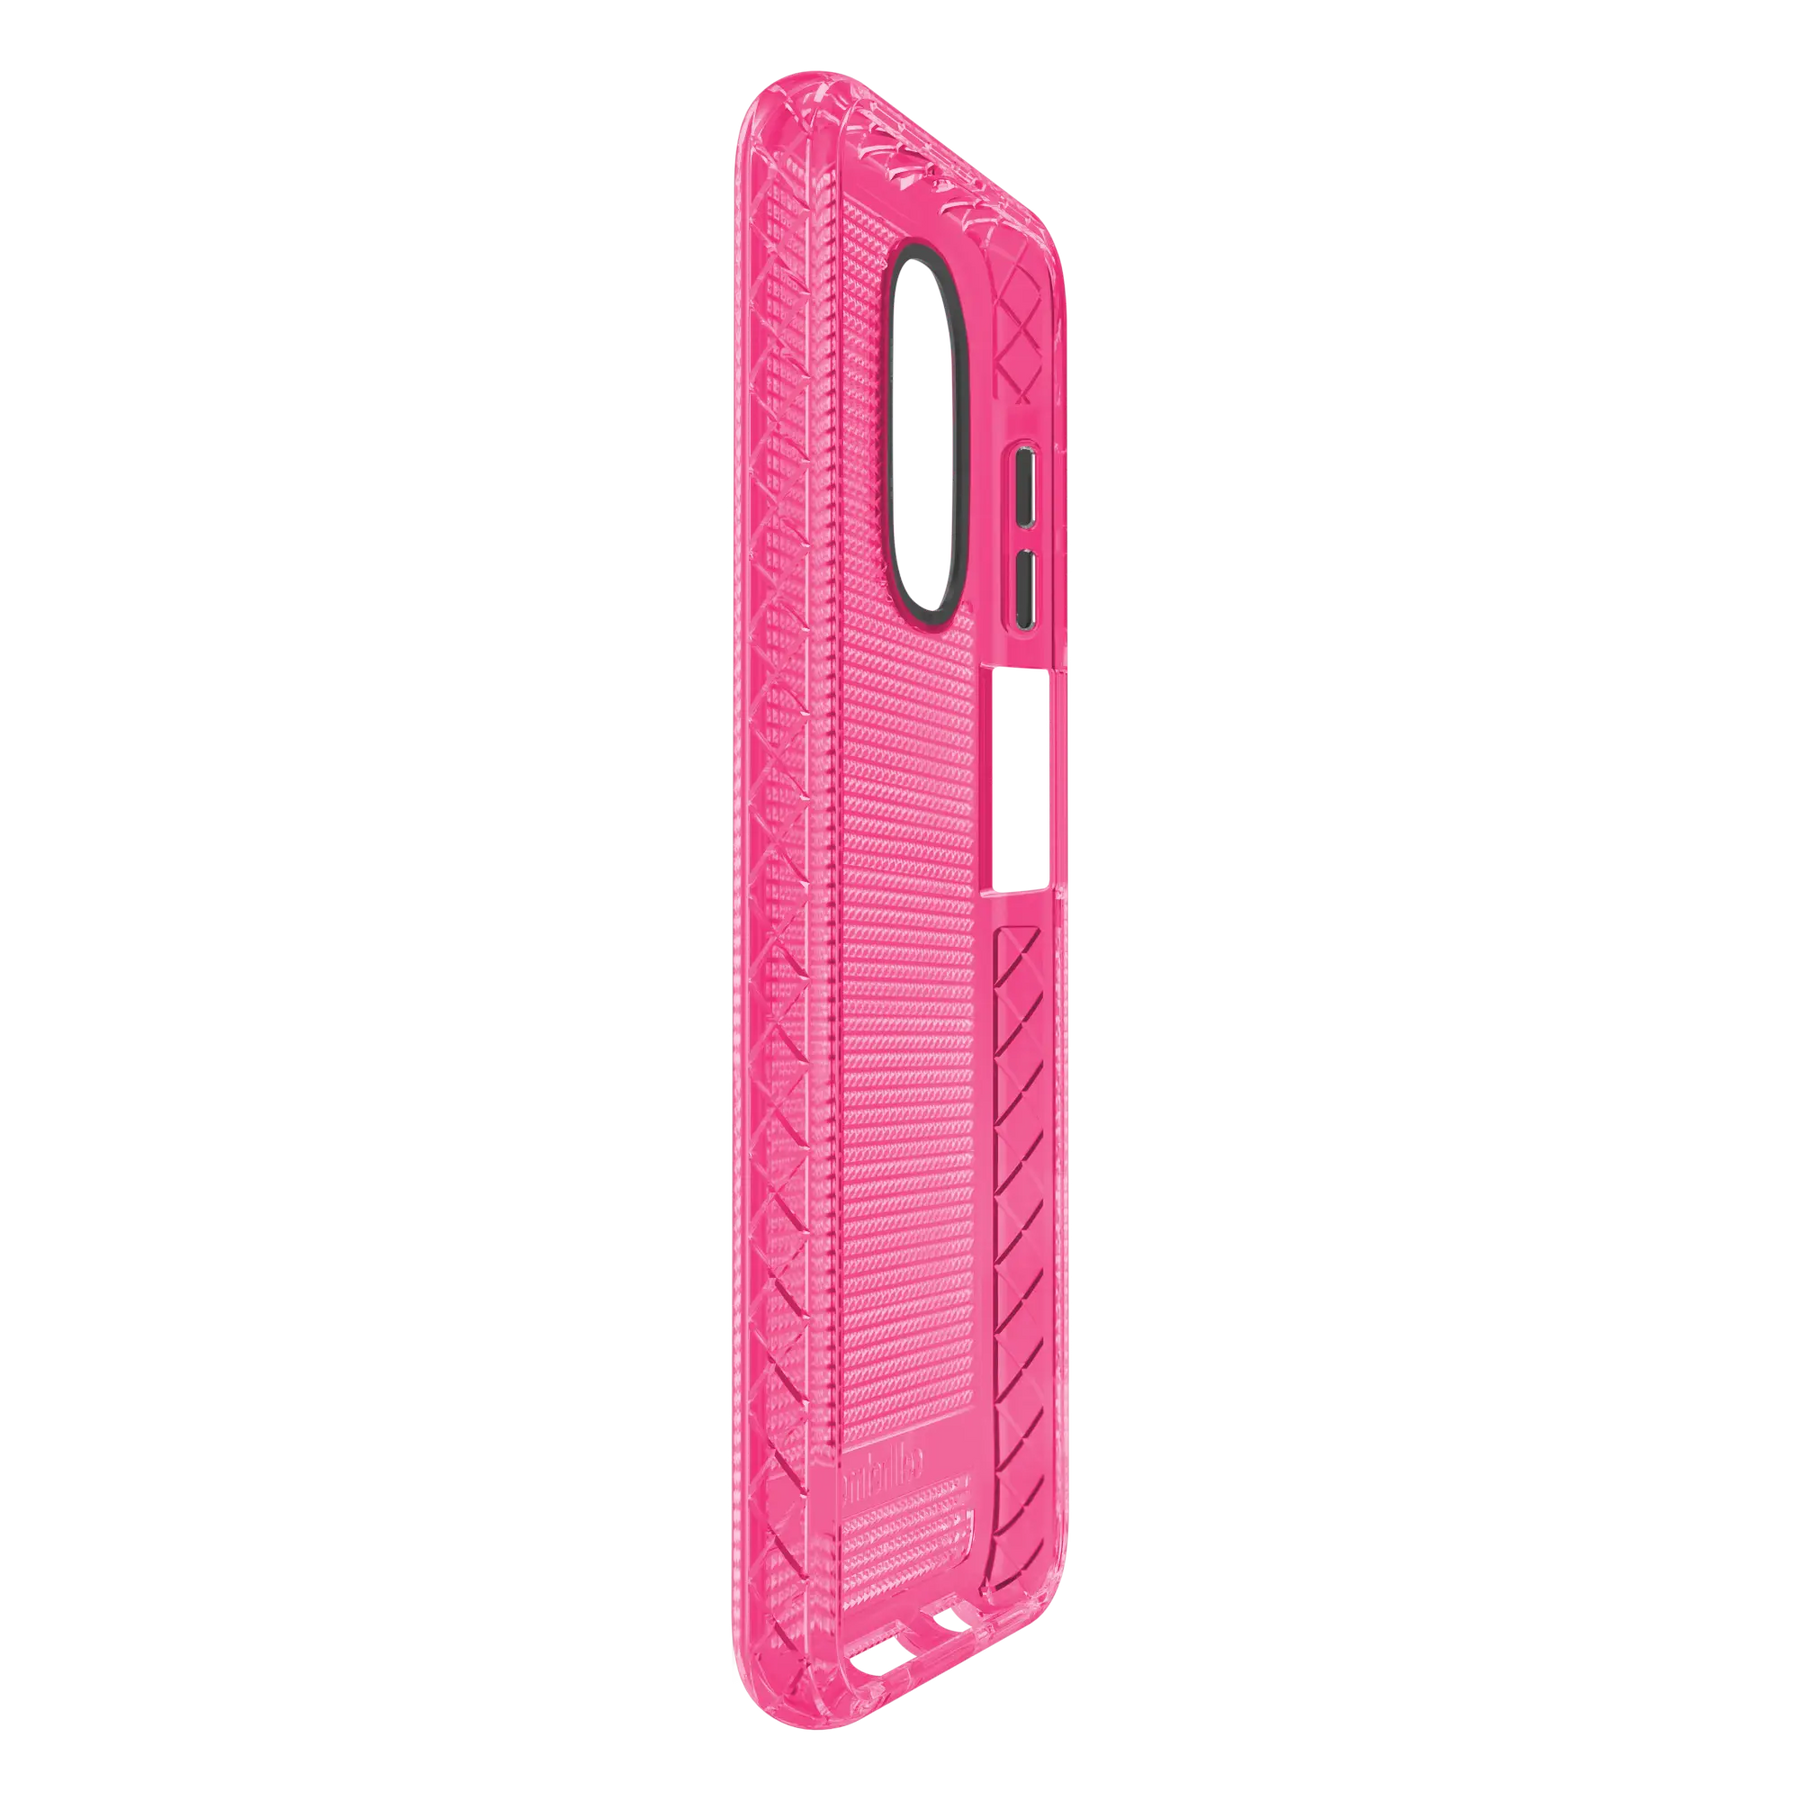 Altitude X Series for Motorola Moto Stylus 4G  - Pink - Case -  - cellhelmet